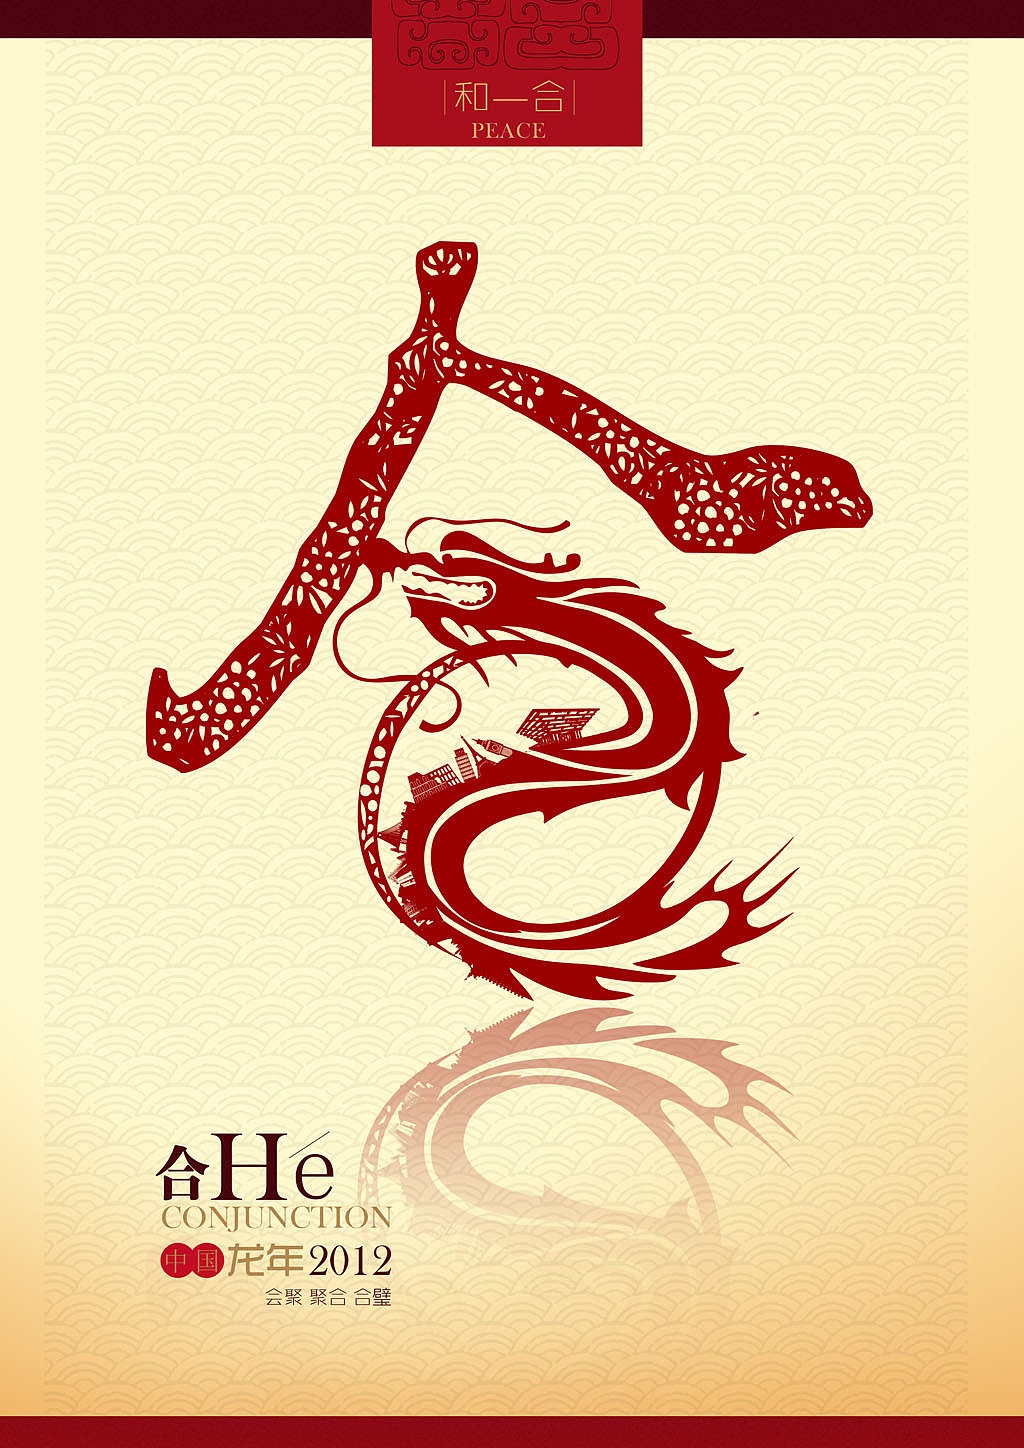 he之龙系列之合:用中国字"合"来与龙相结合以表达对未来2012年成就"